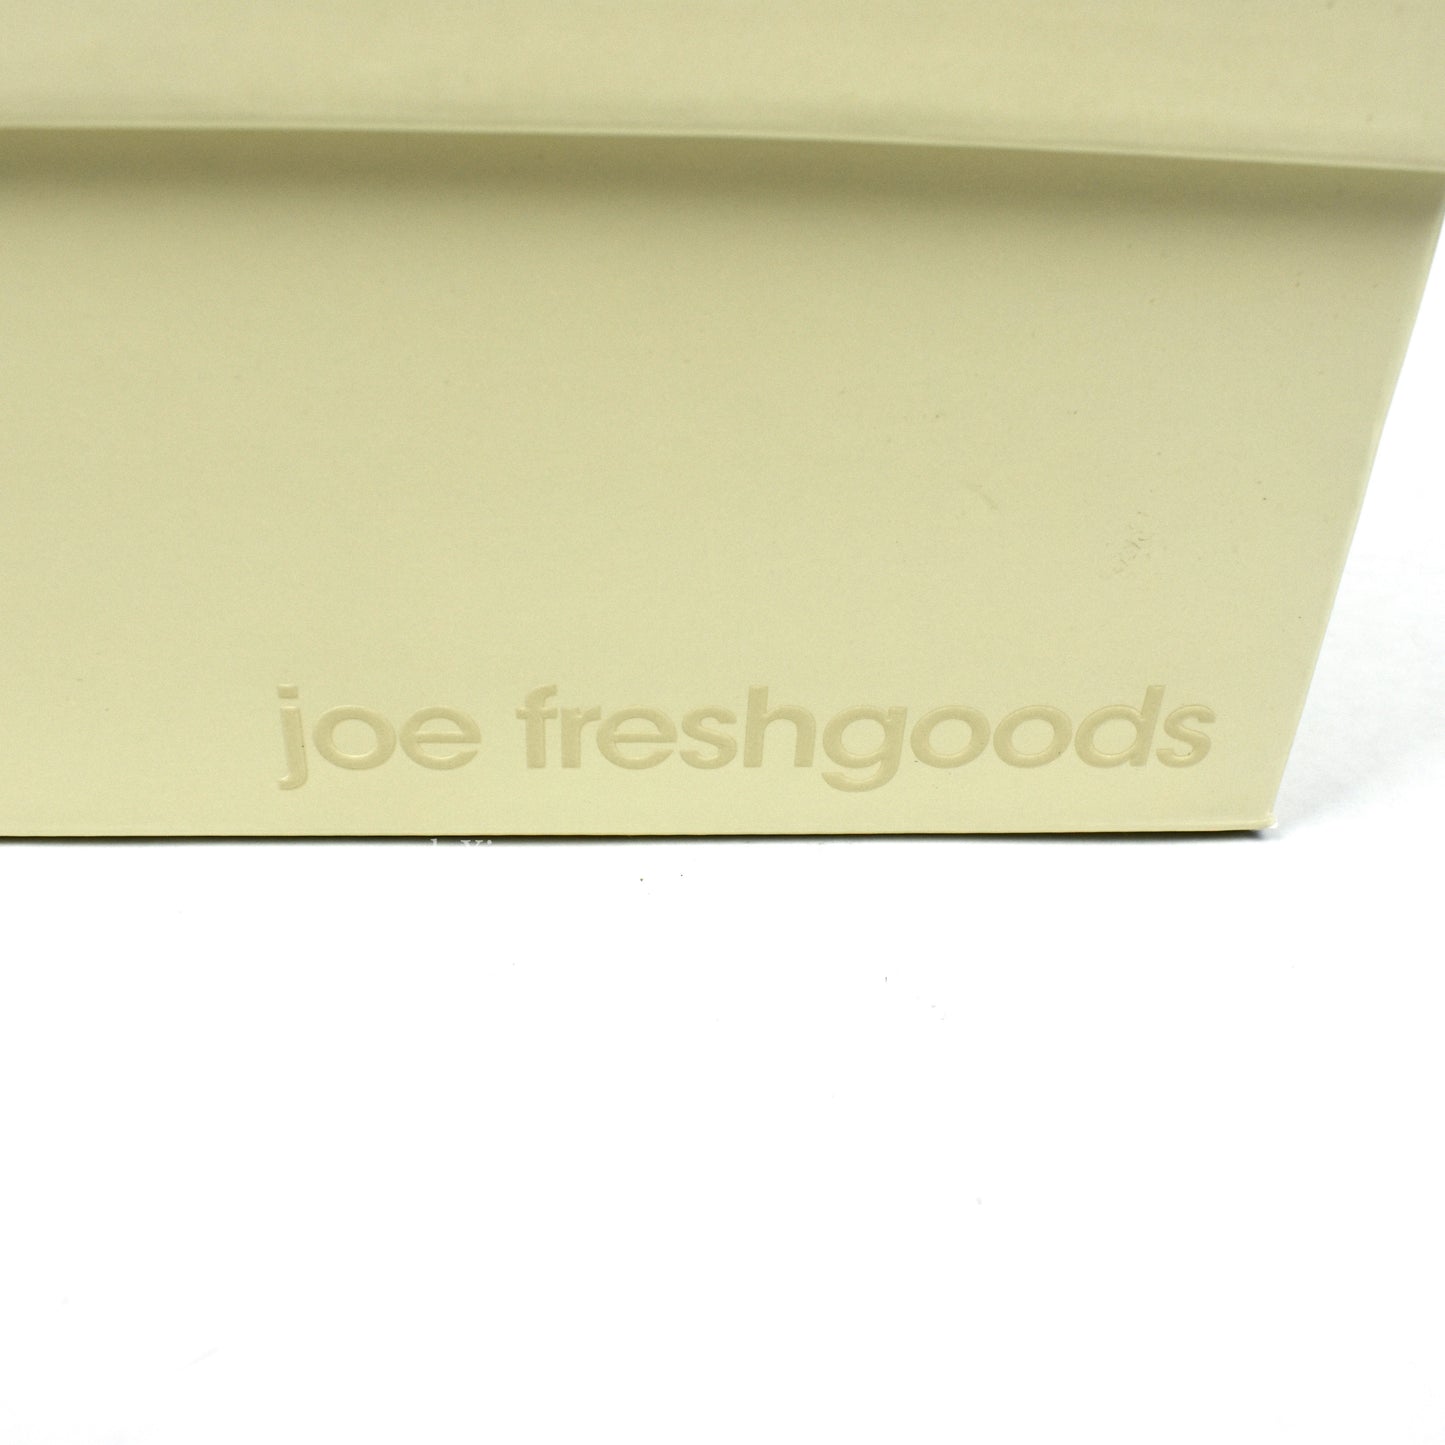 New Balance x Joe Fresh Goods - 993 'Performance Art' (Sage Green)